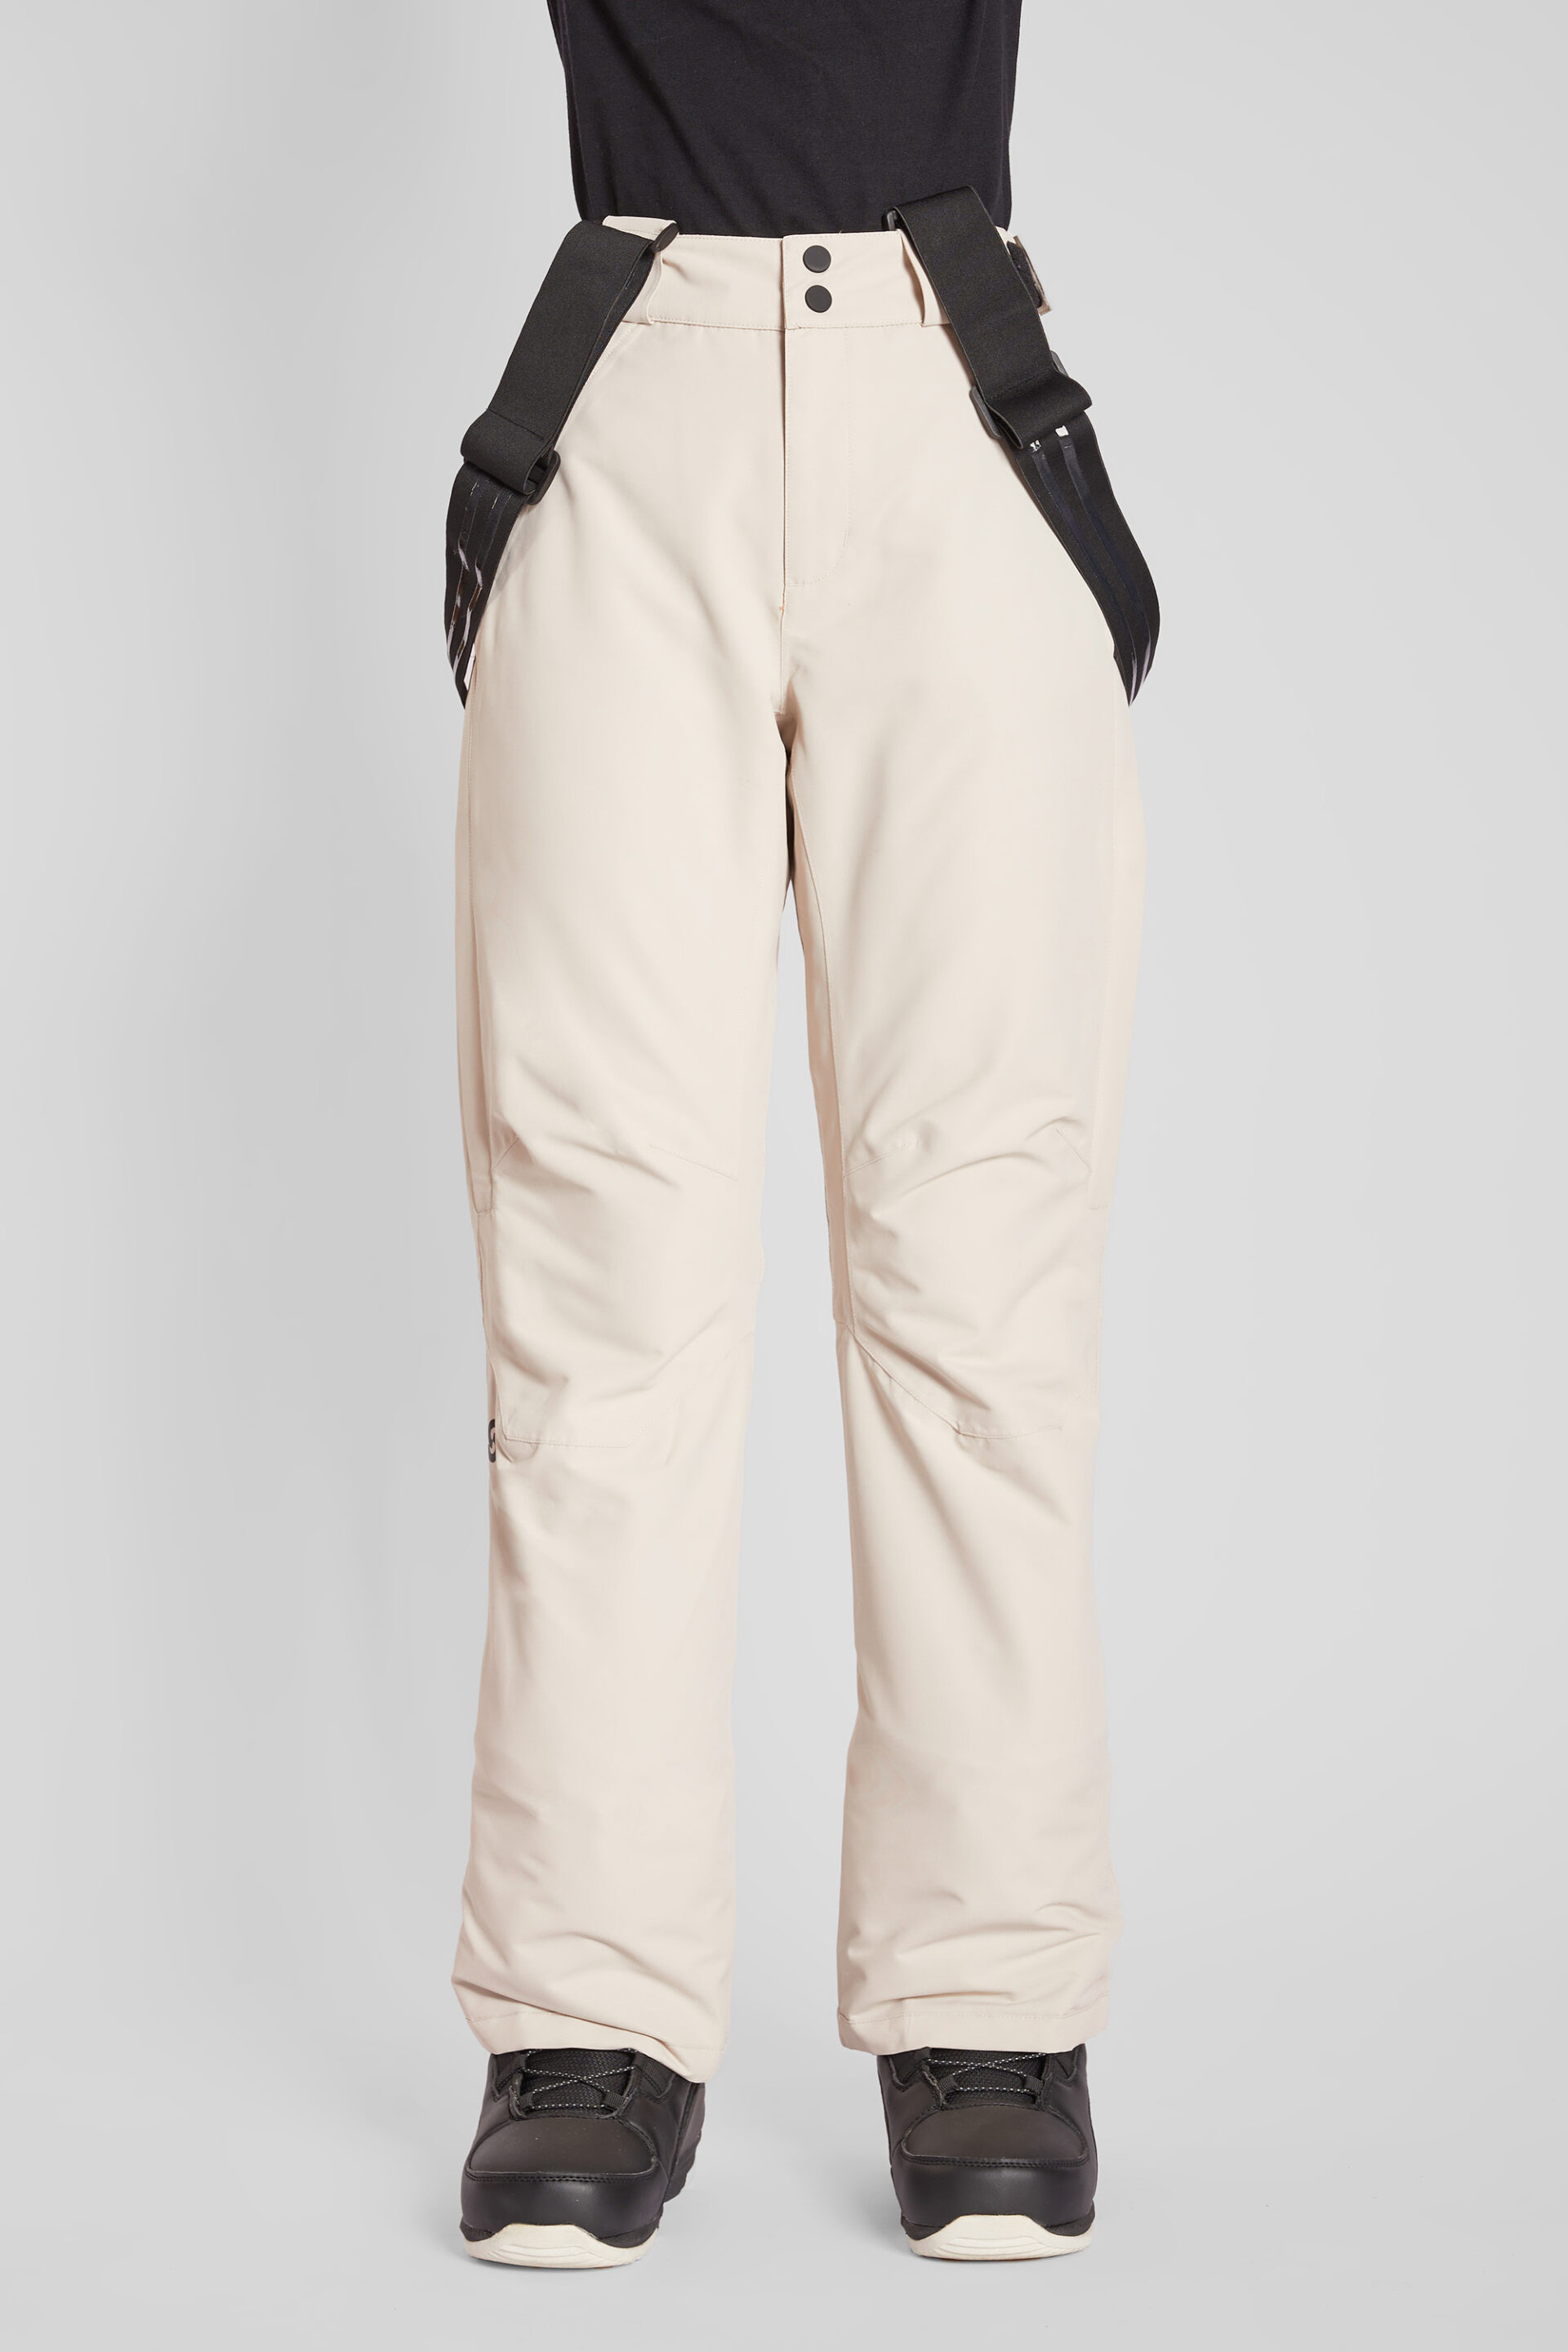 Renewed - Terra Ski Pants Pale Violet - Small - Women's - Strobe